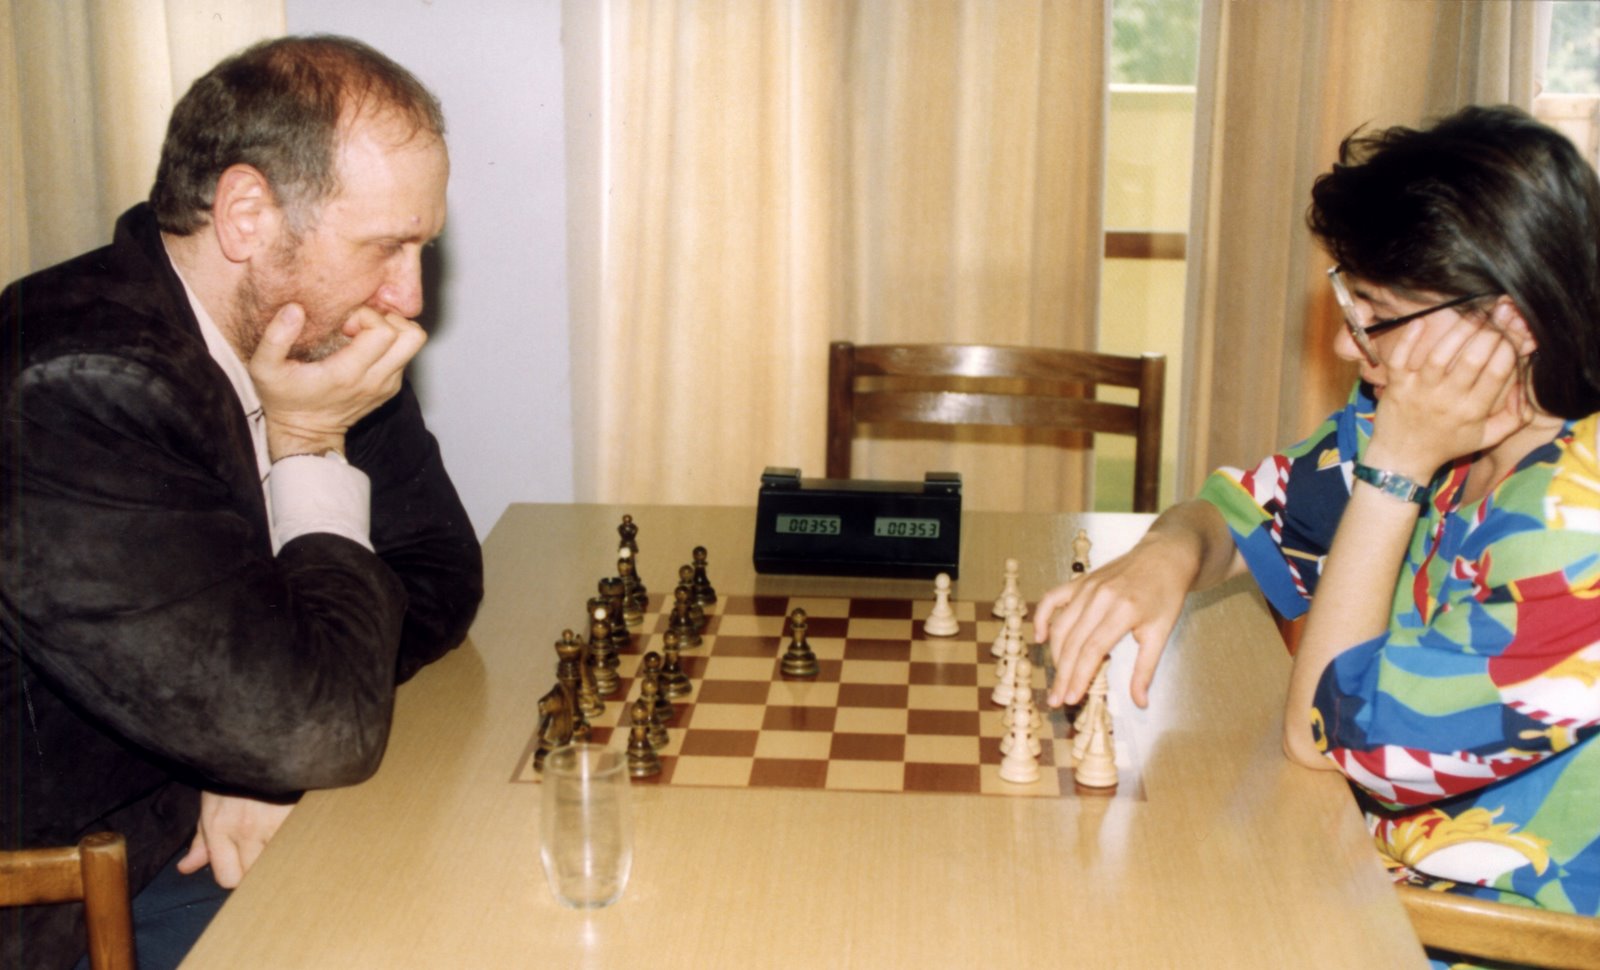 Boris Spassky & Bobby Fischer by Harry Benson